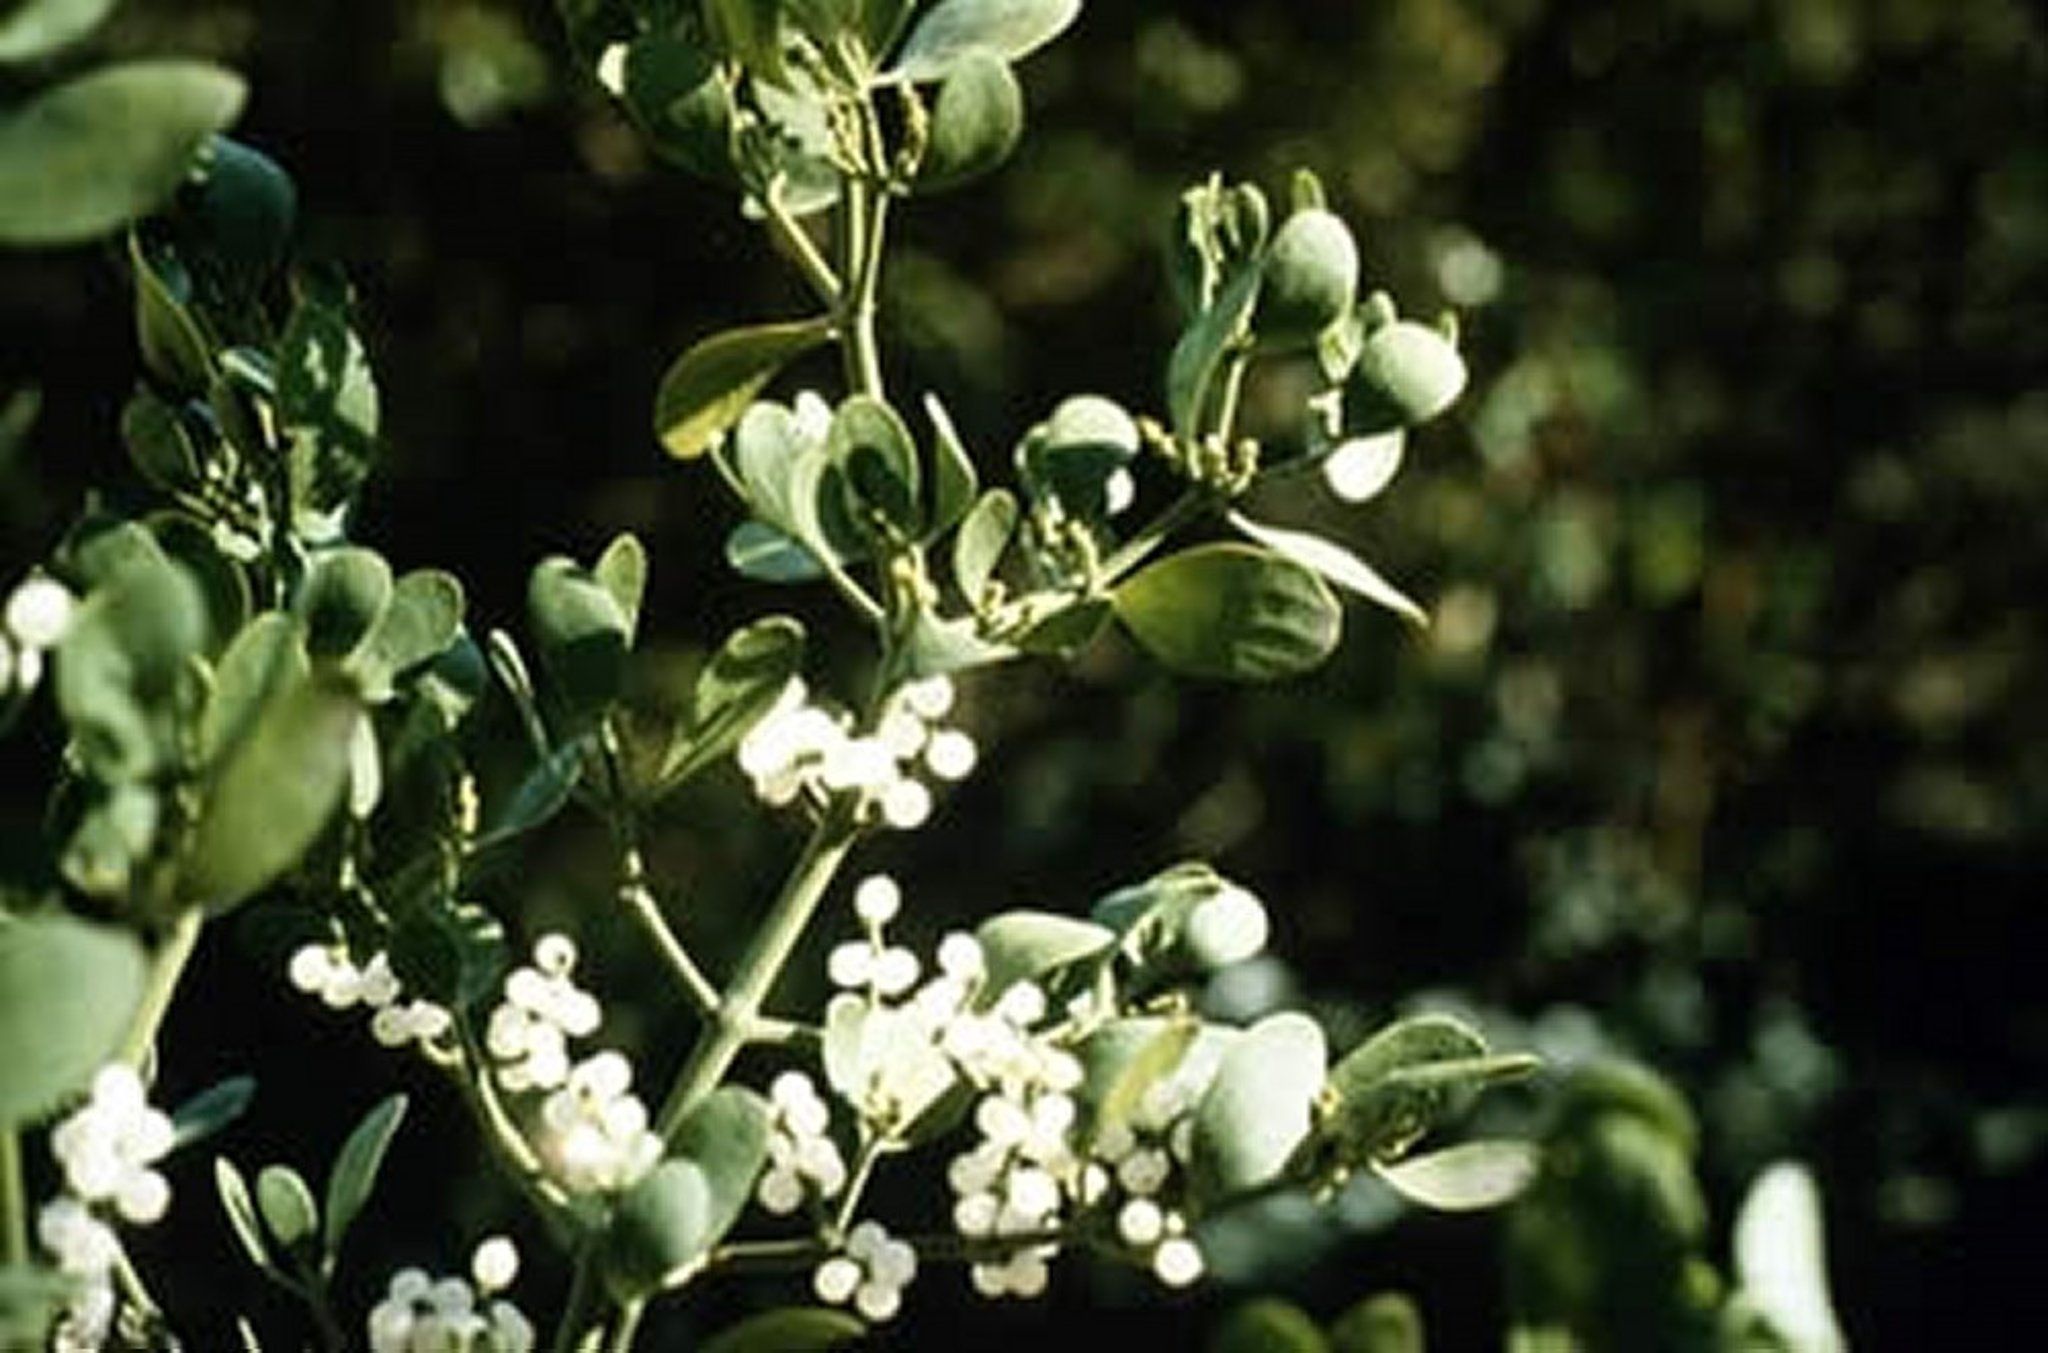 Phoradendron serotinum (Mistletoe), branch with berries